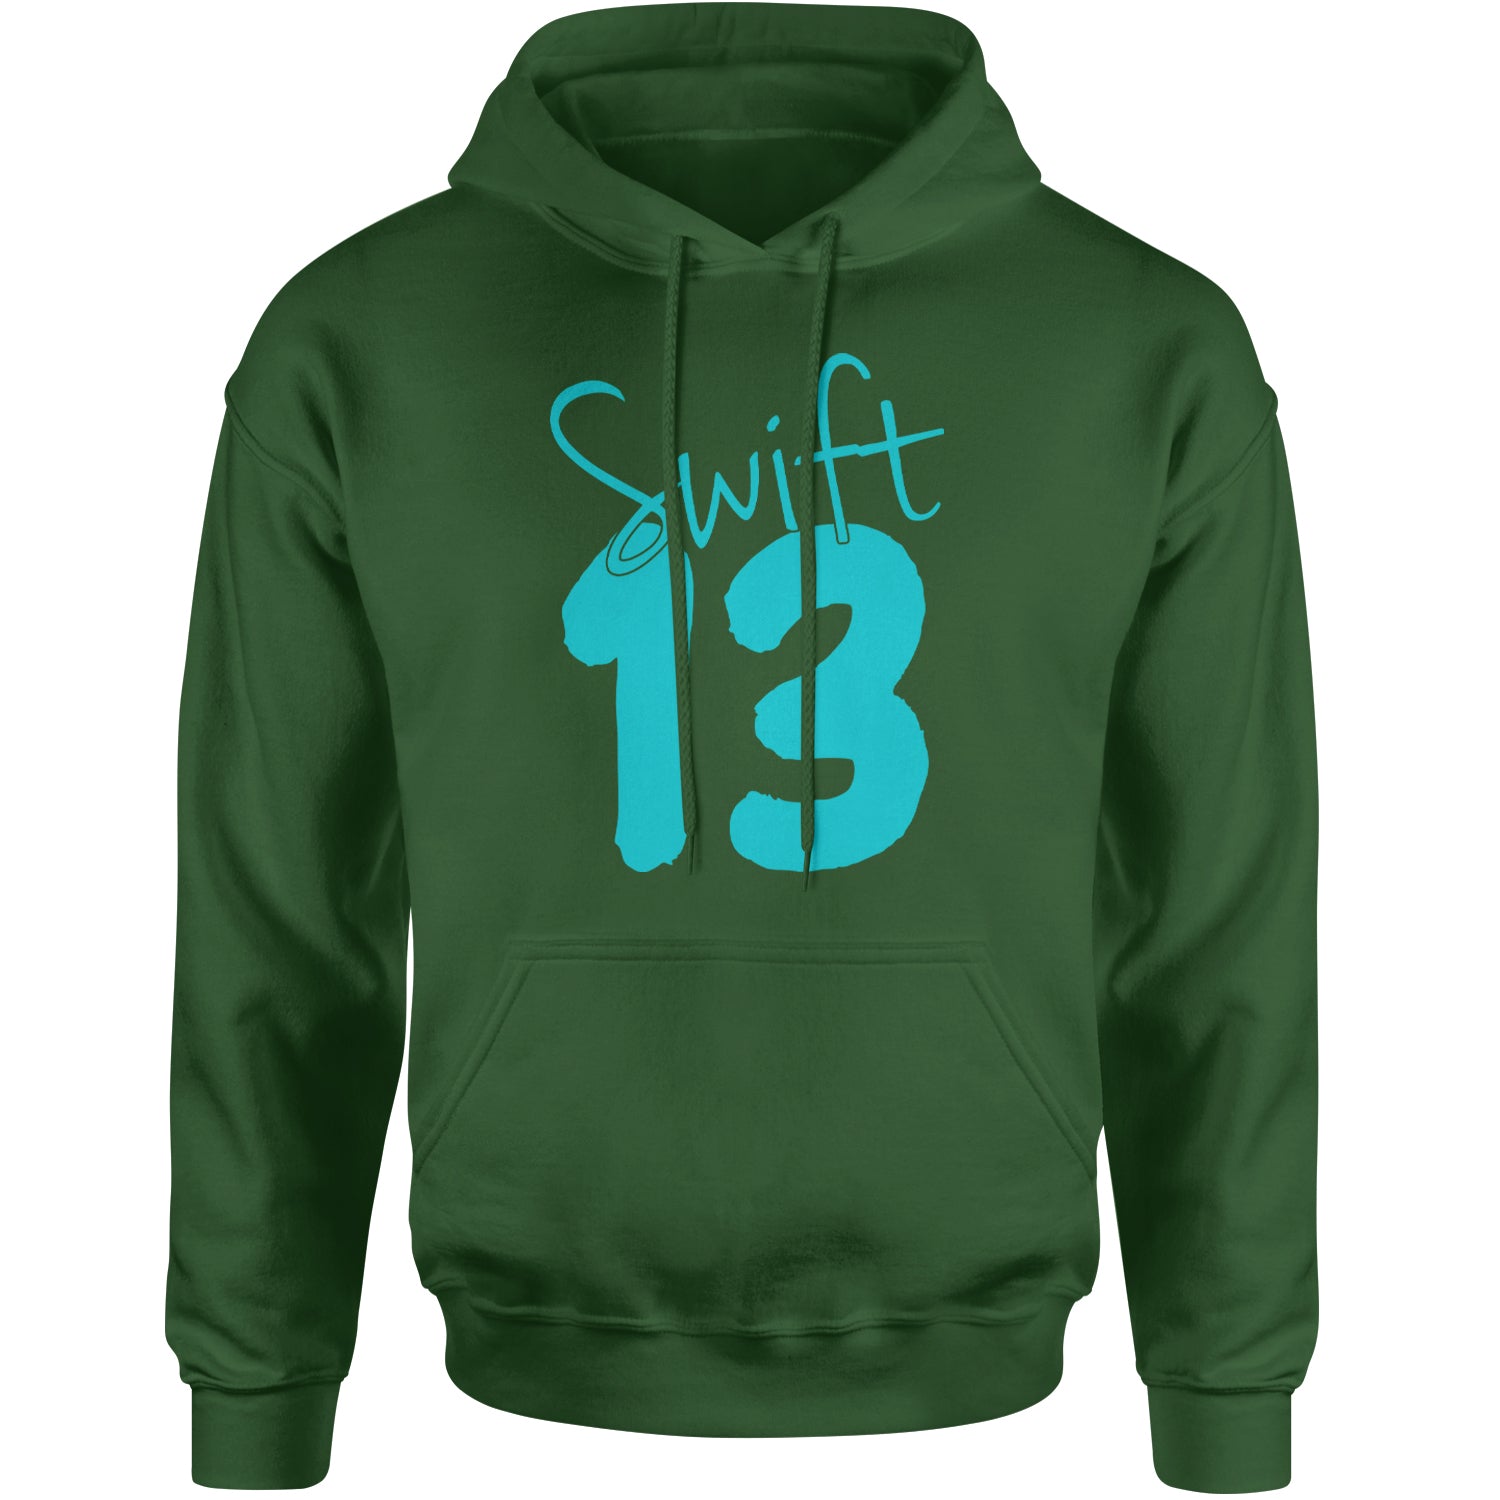 13 Swift 13 Lucky Number Era TTPD Adult Hoodie Sweatshirt Forest Green